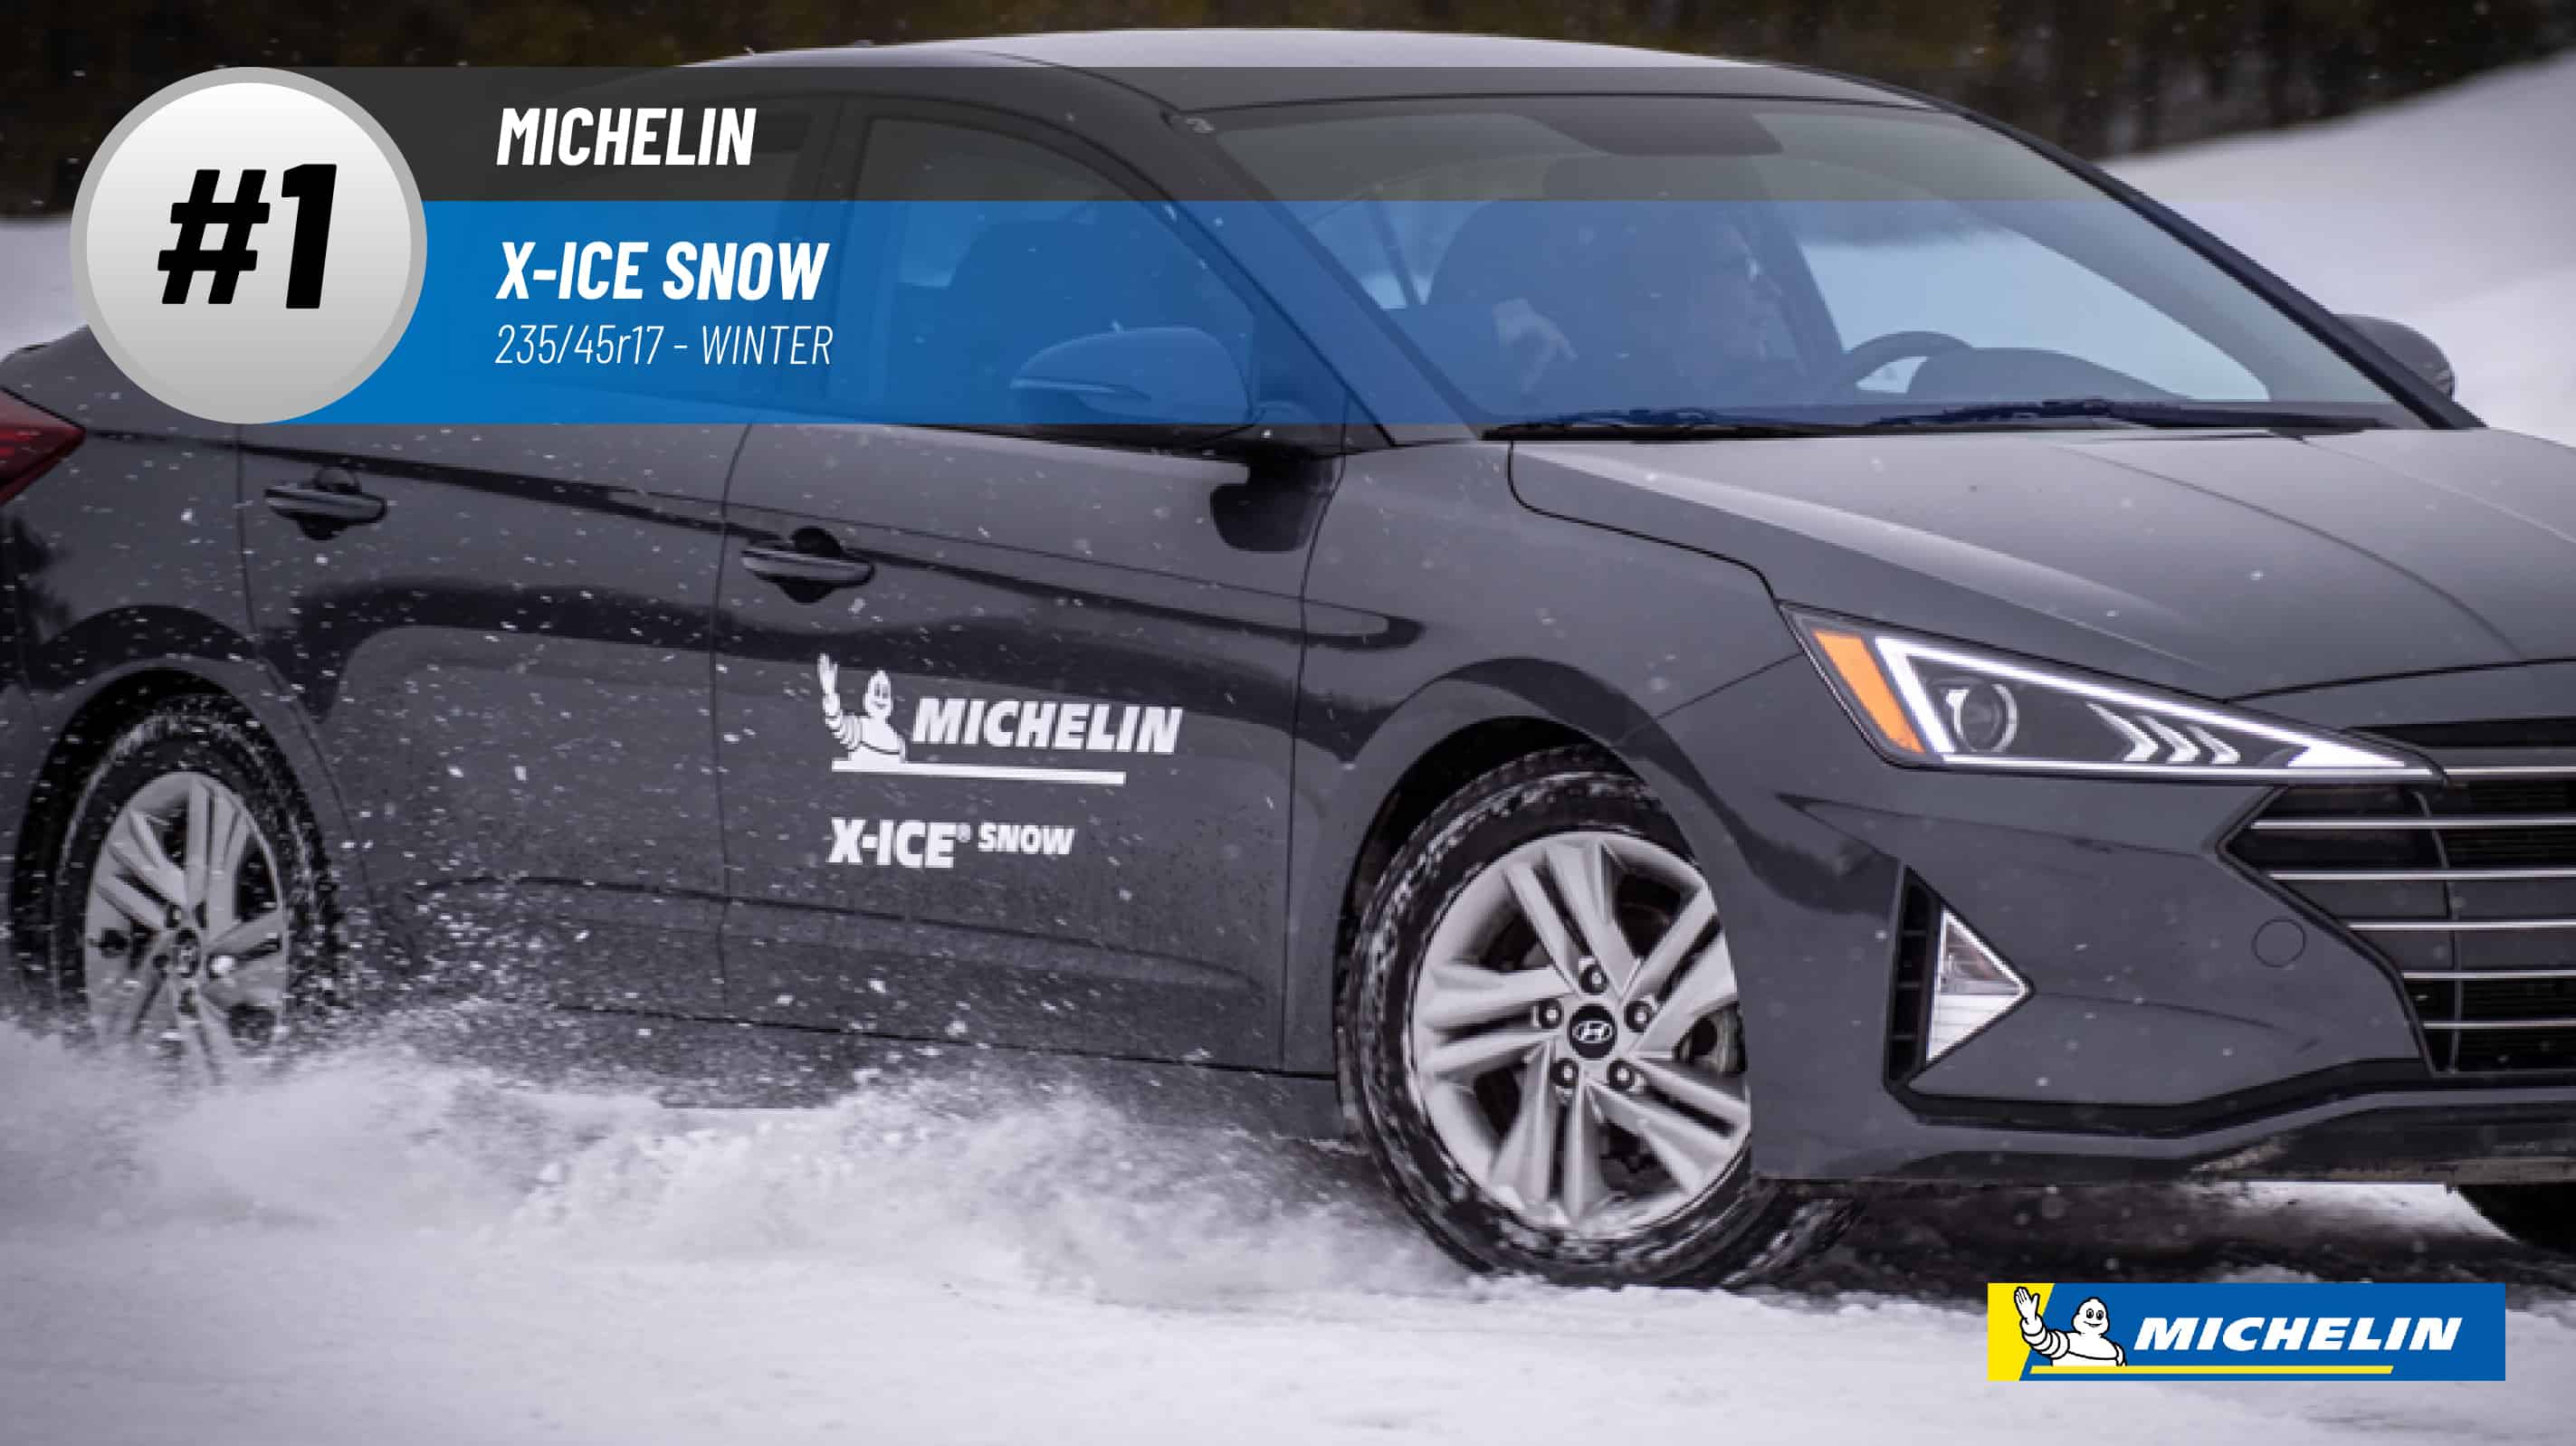 Top #1 Winter Tires: Michelin X-Ice Snow – 235/45r17